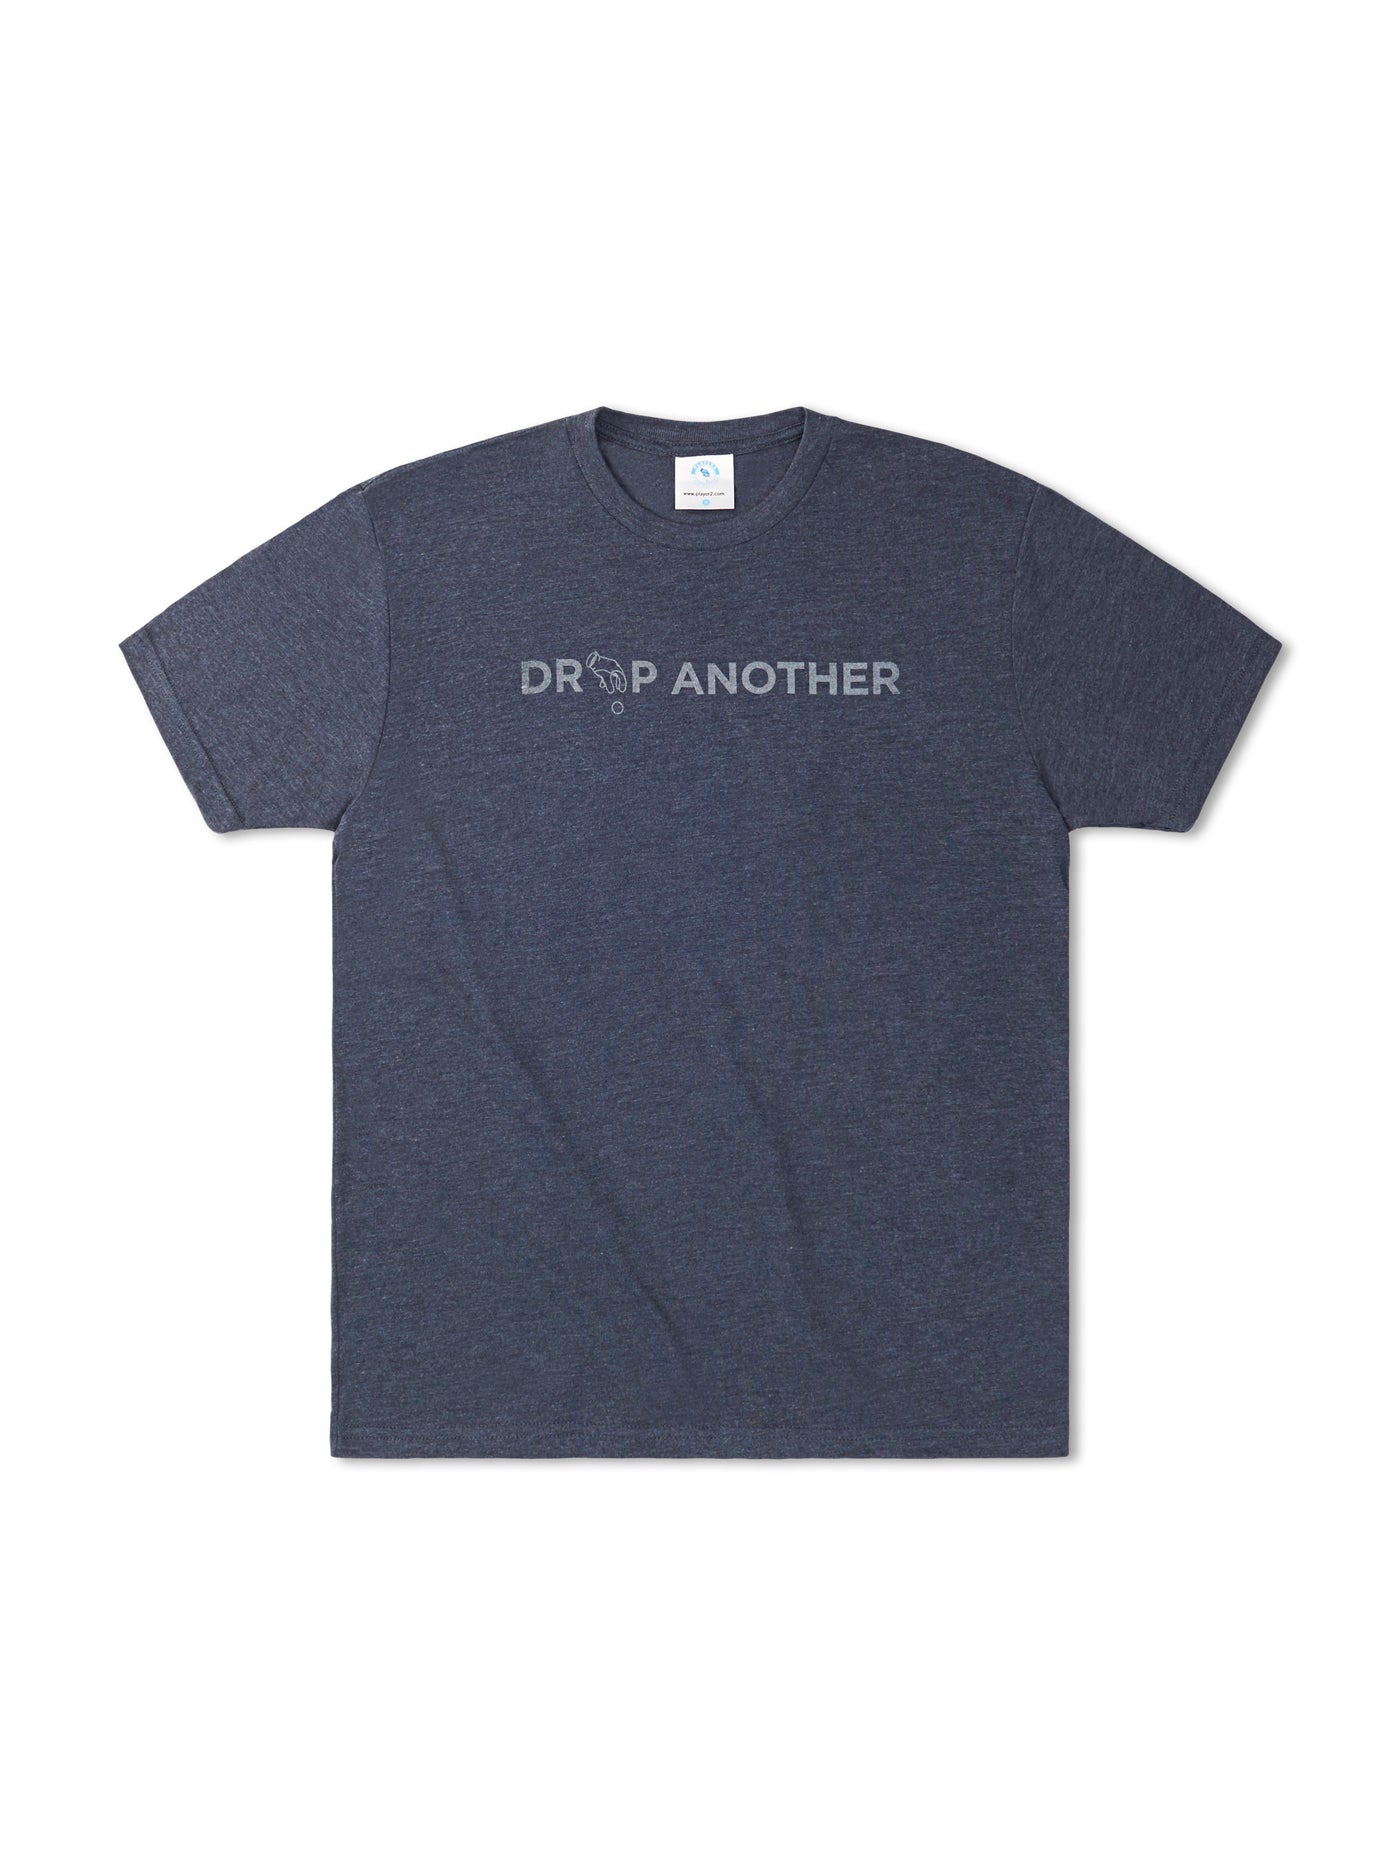 Drop Another T-Shirt